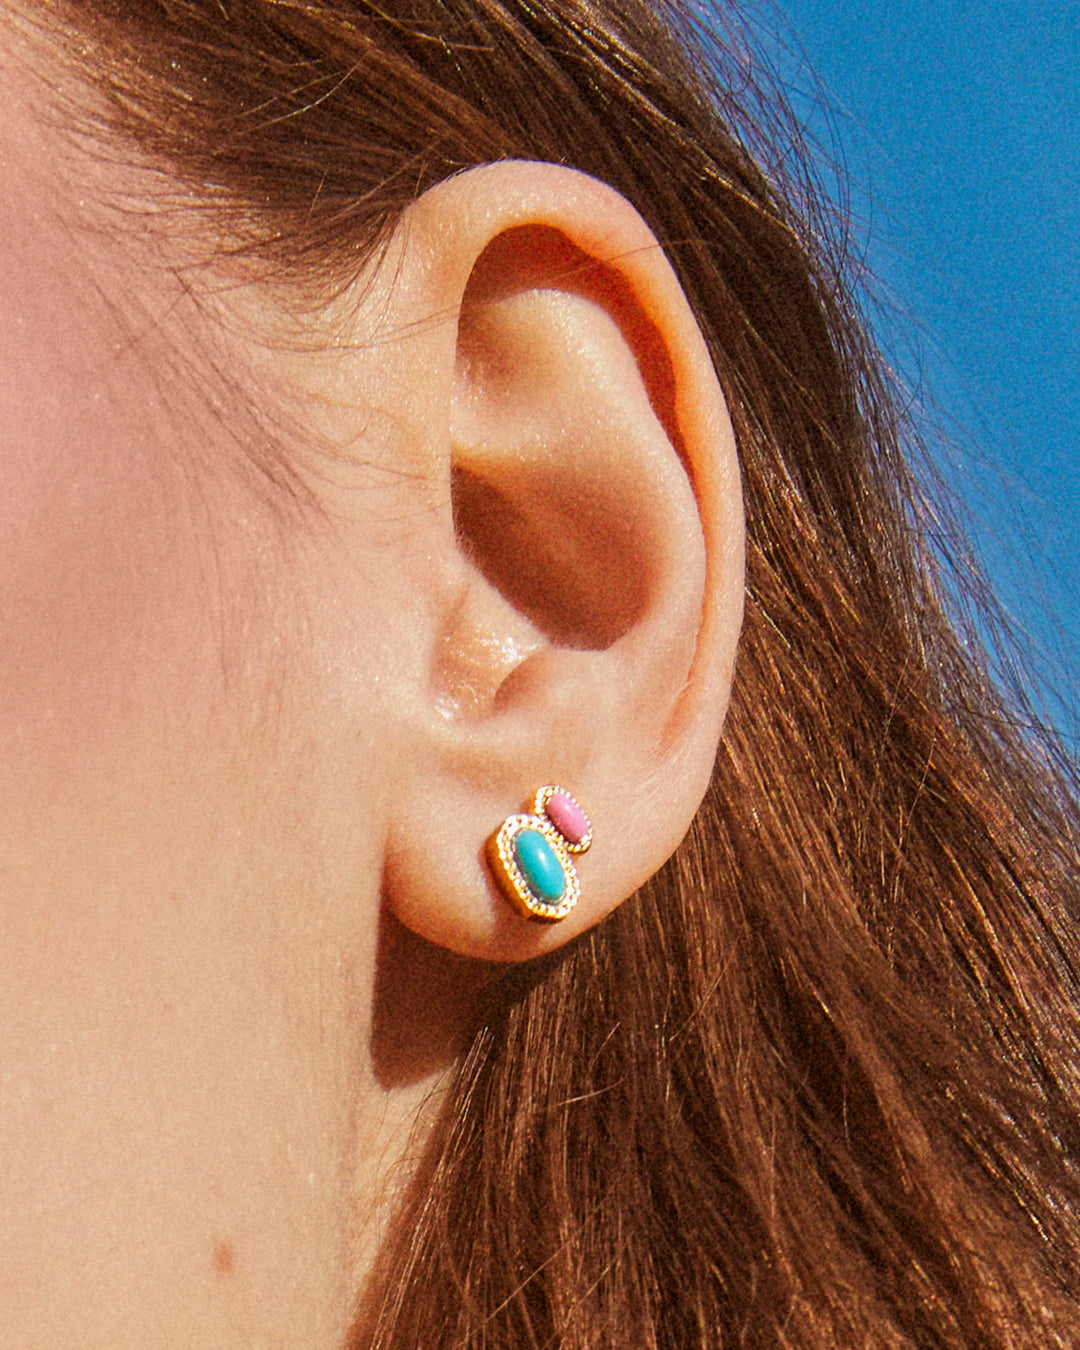 Mini Ellie Turquoise Stud Earrings in Gold